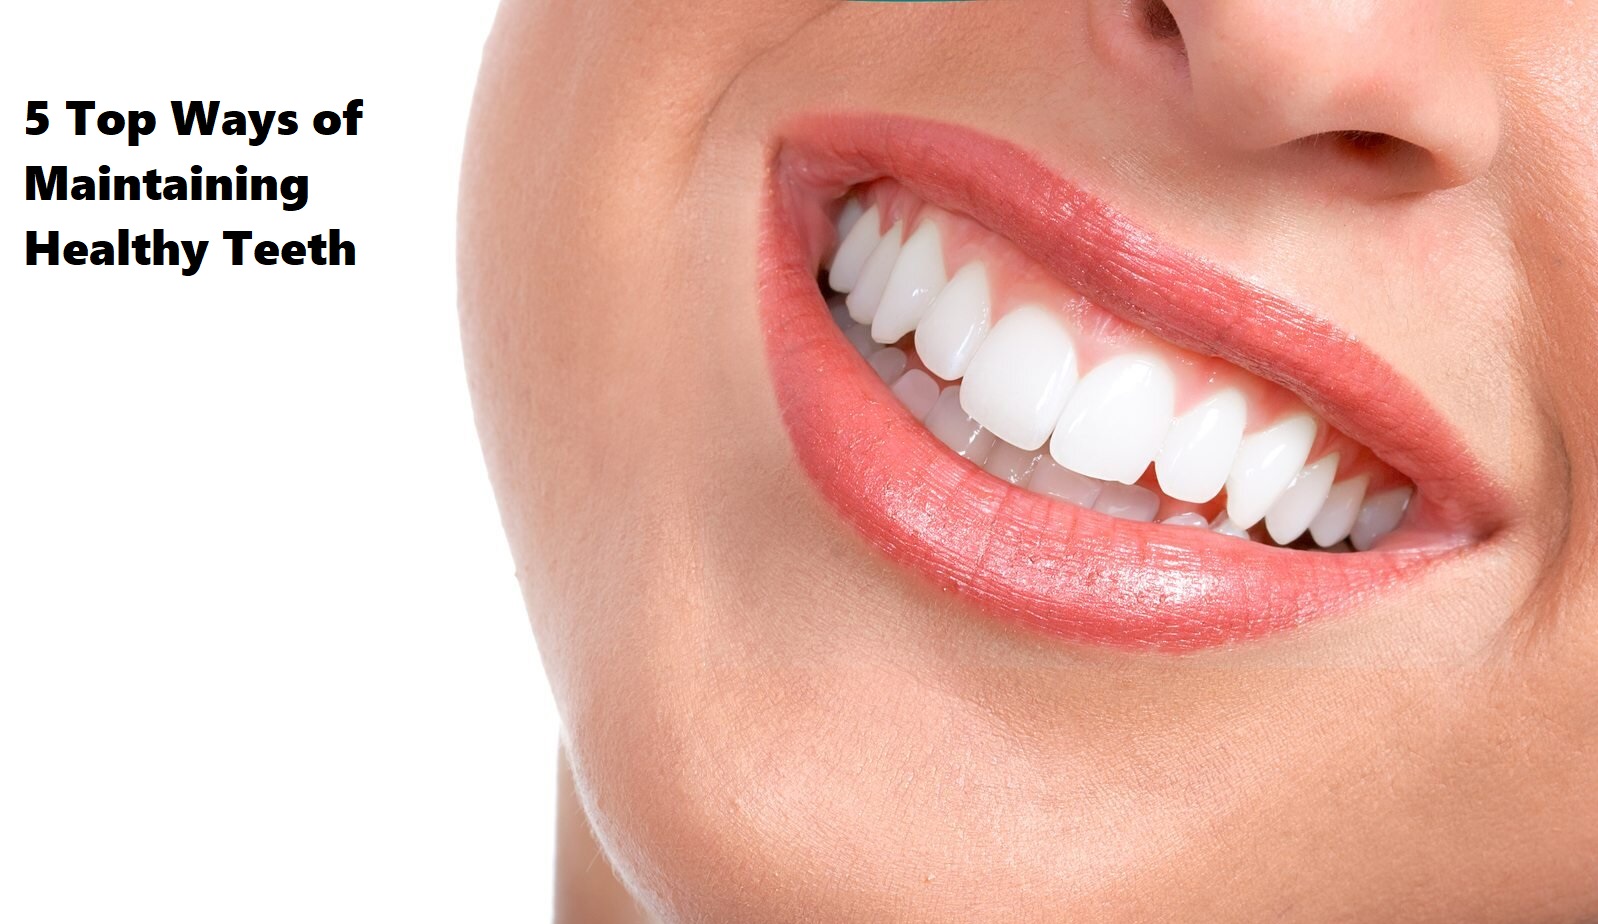 5 Top Ways of Maintaining Healthy Teeth